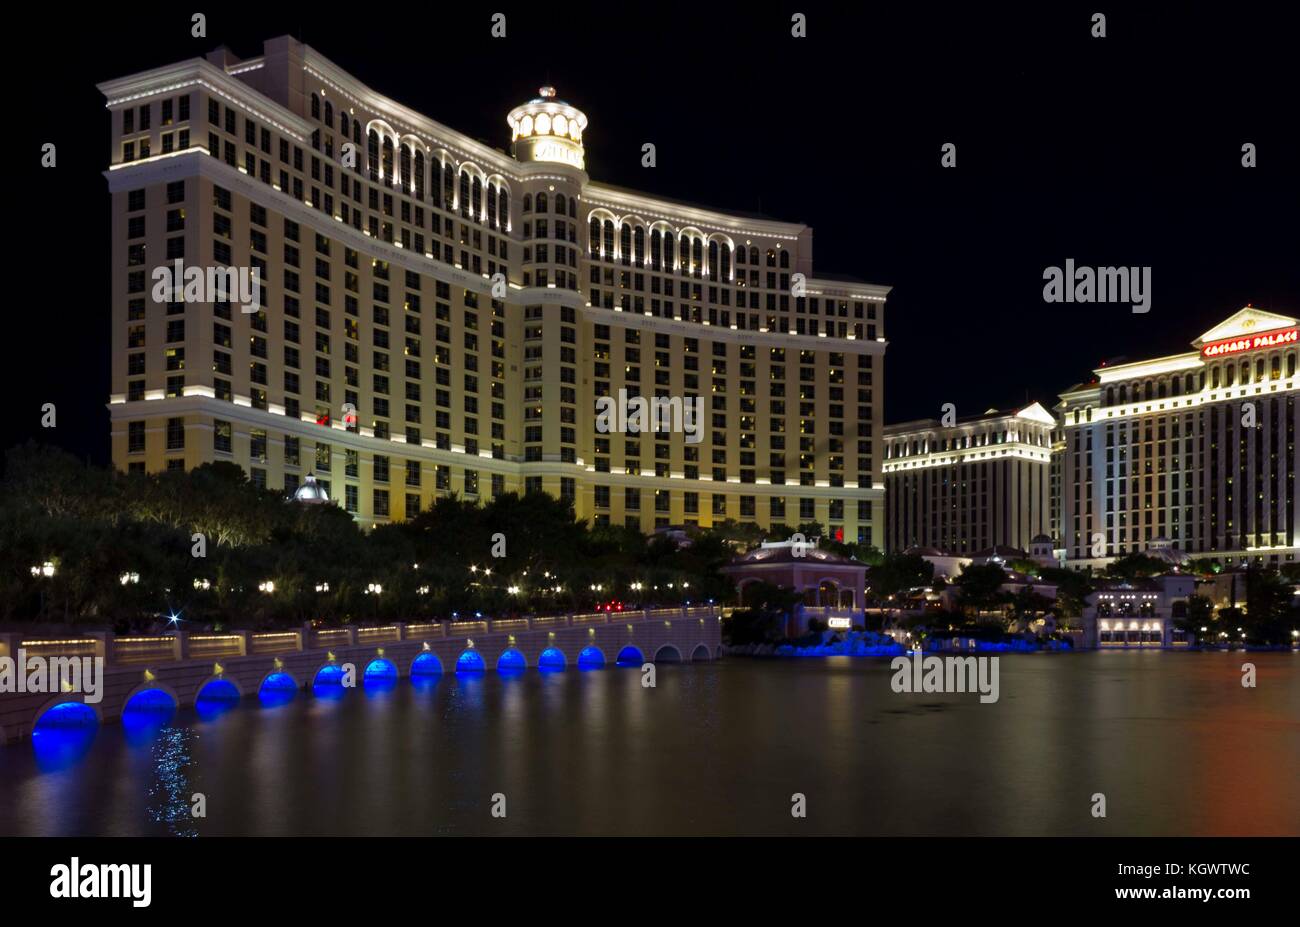 LAS VEGAS, USA - 5. August: Nachtansicht der berühmten Bellagio Hotel in Las Vegas, Caesars Palace, am 5. August 2012 Stockfoto